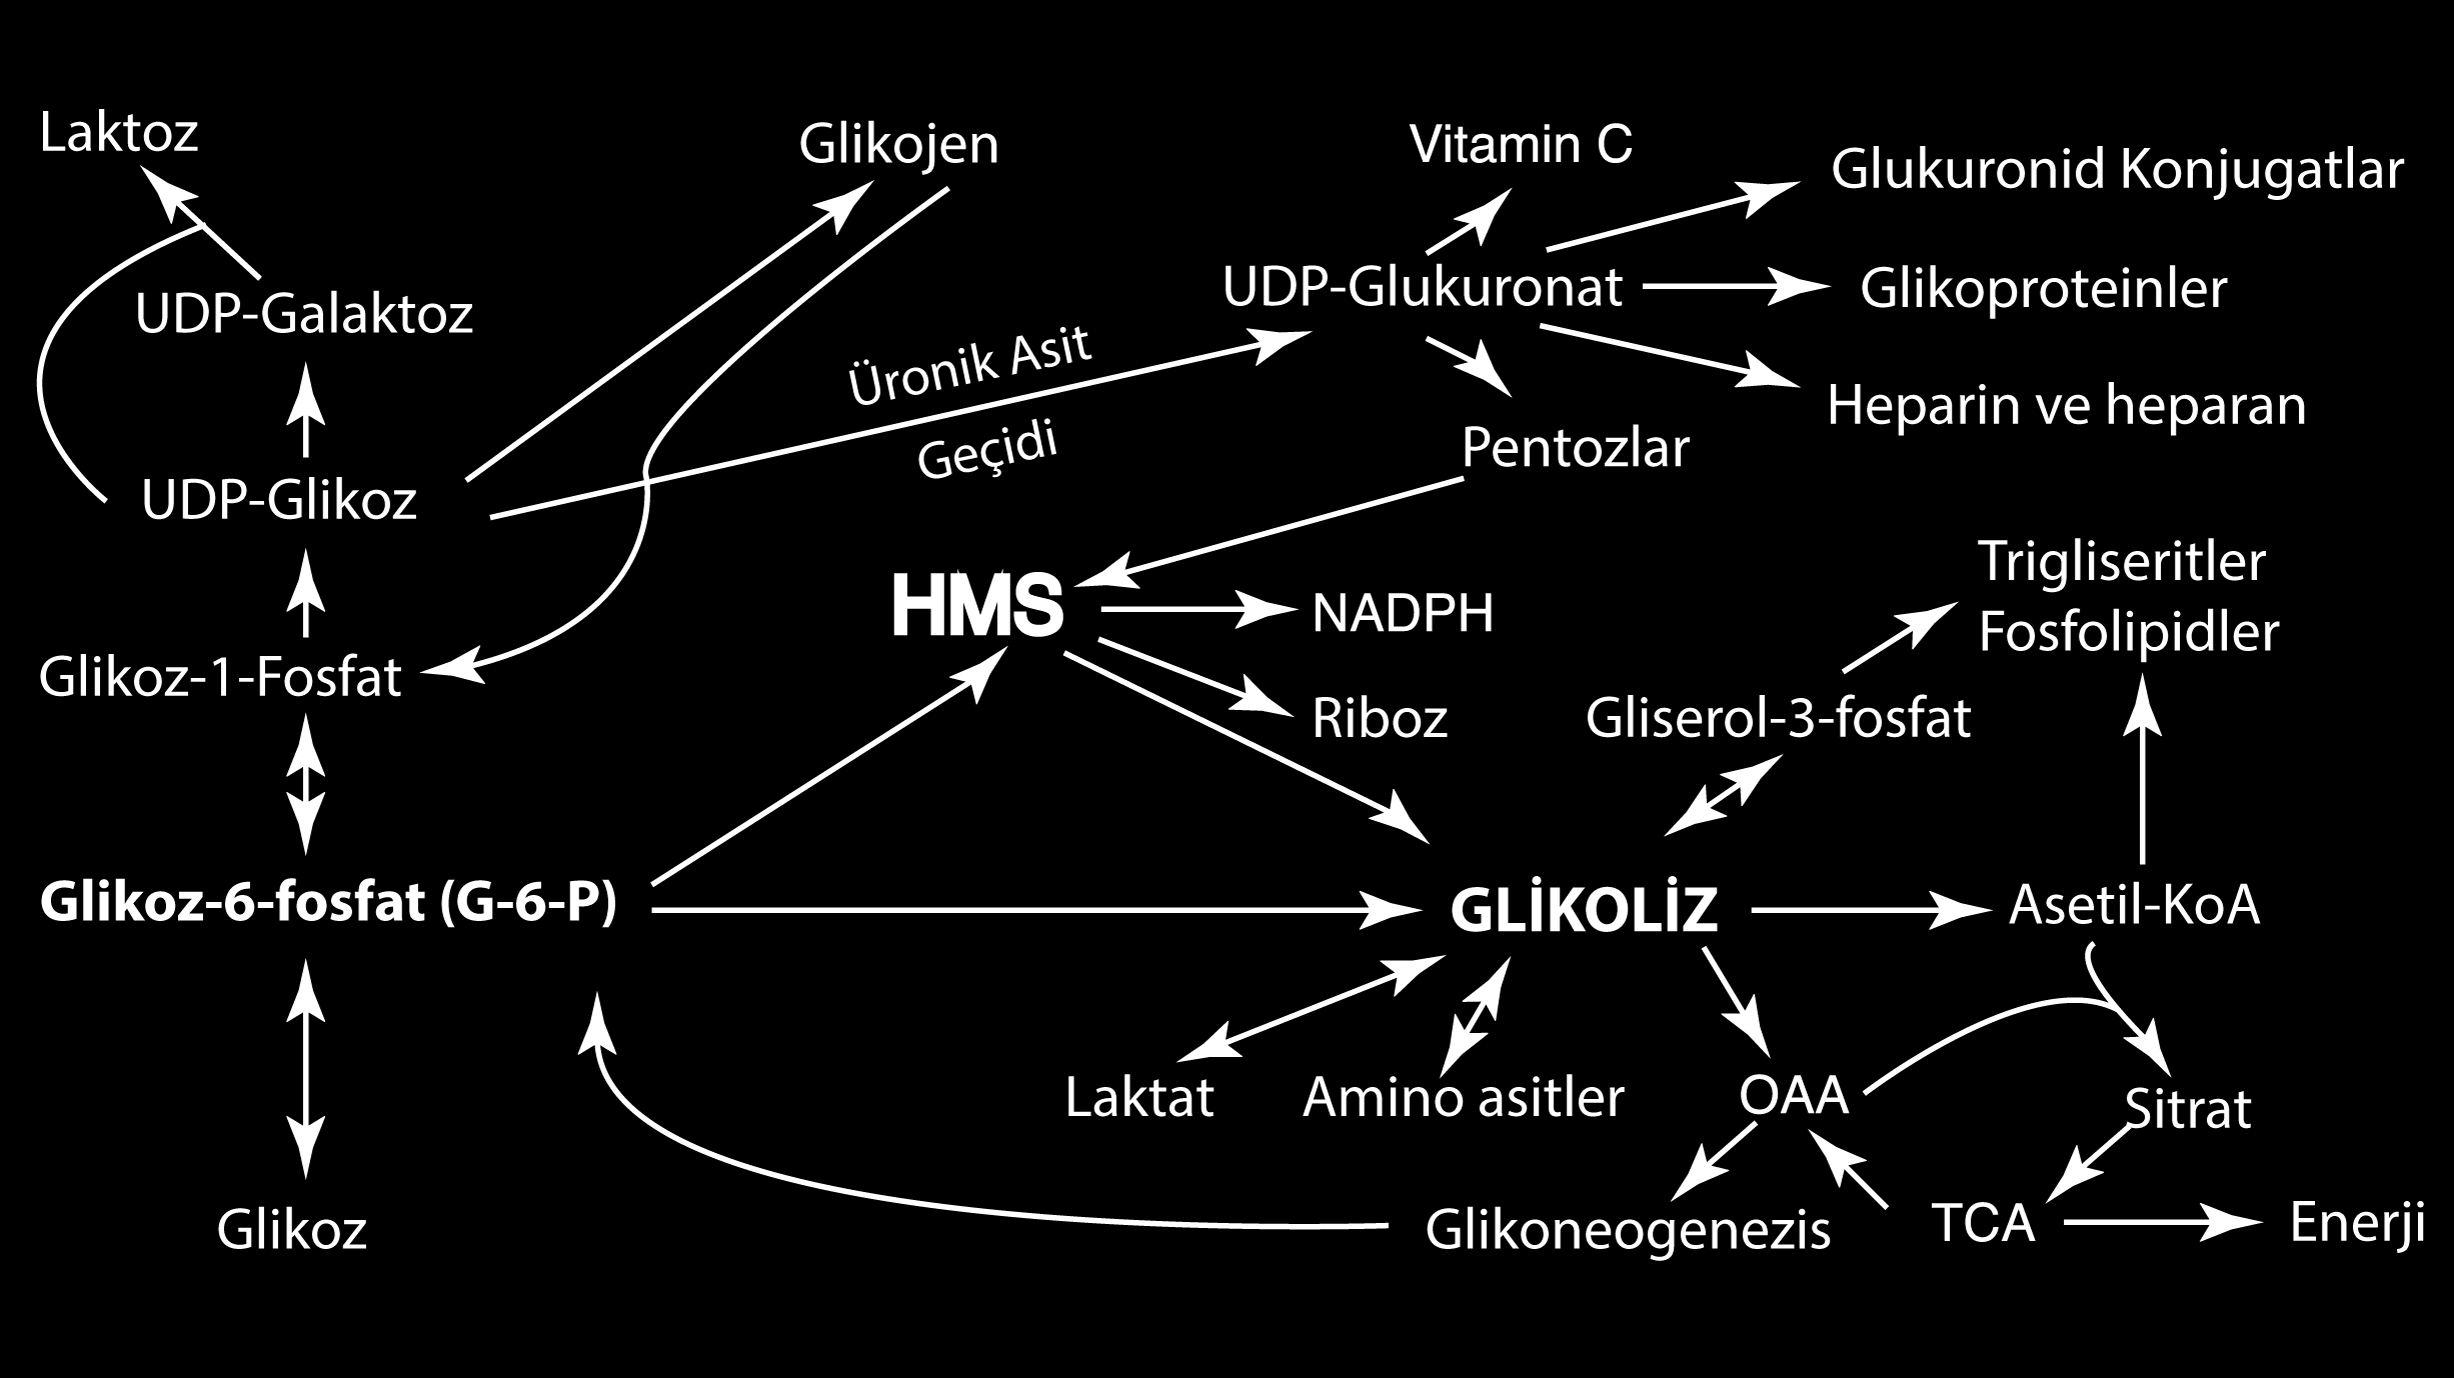 Glikoz-6-fosfat ın olası